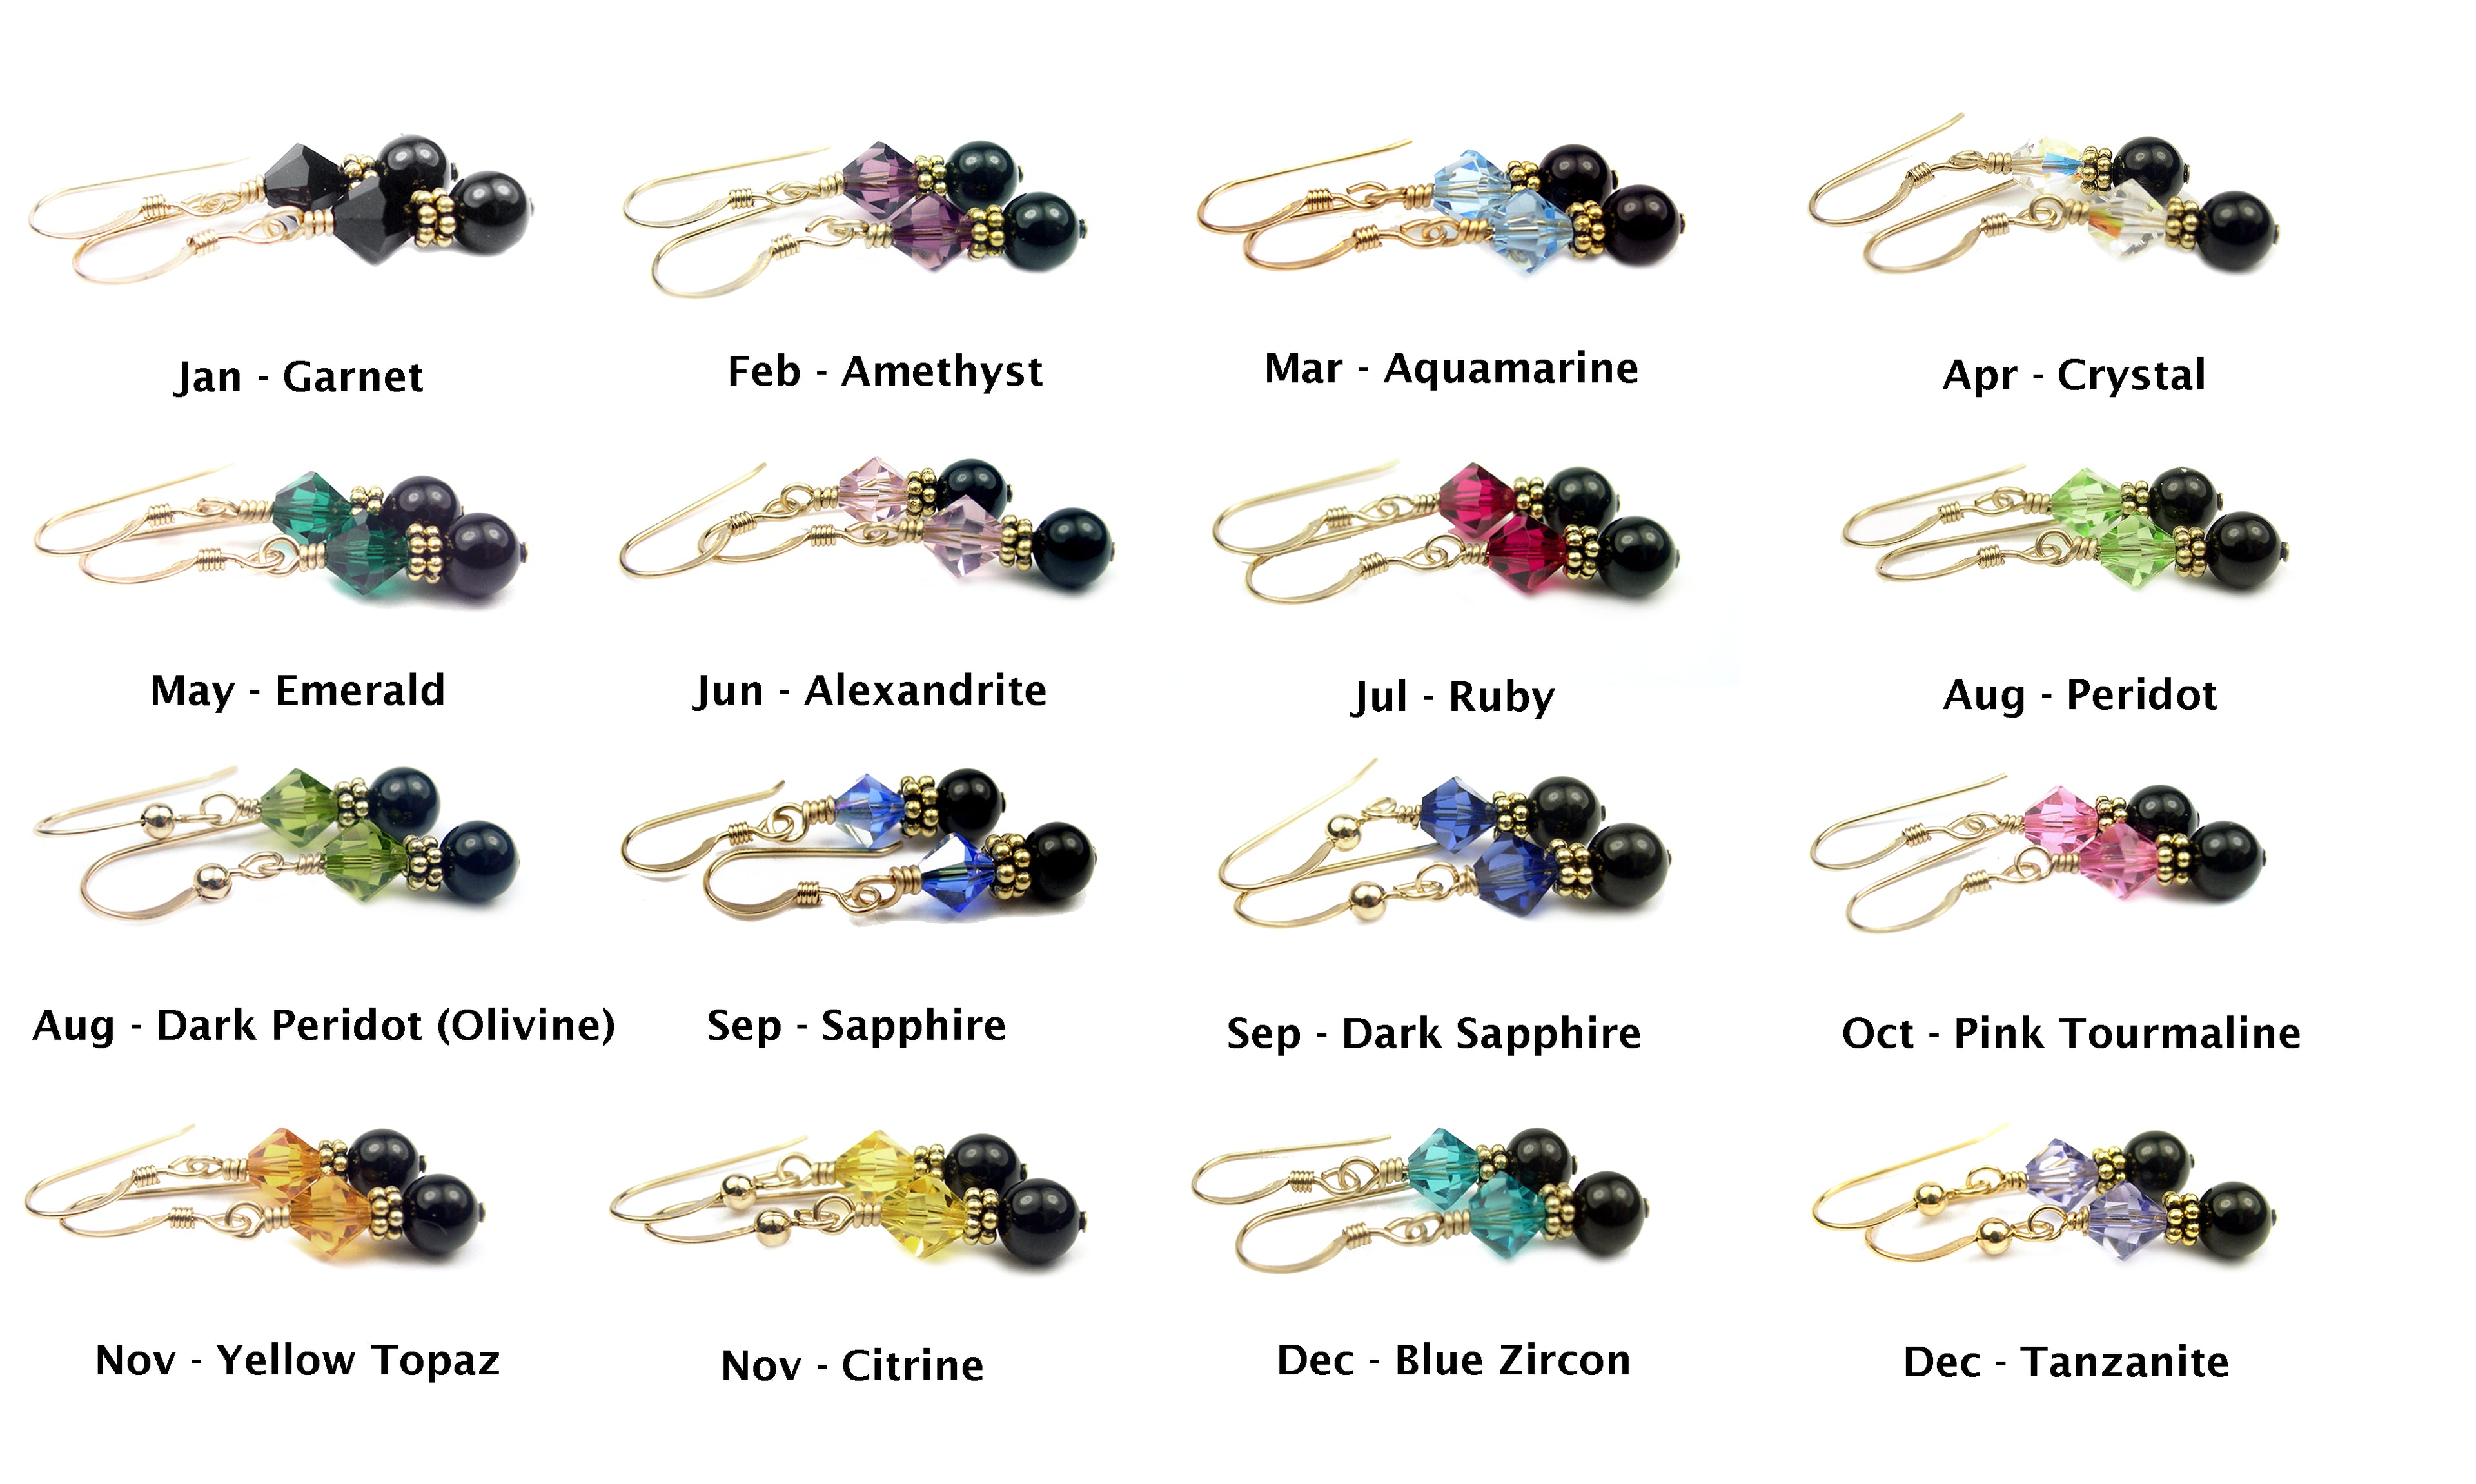 14Kt GF Citrine Earrings, November Birthstone, Black Pearl Drop Earrings, Austrian Crystal Earrings, Yellow Crystal Jewelry